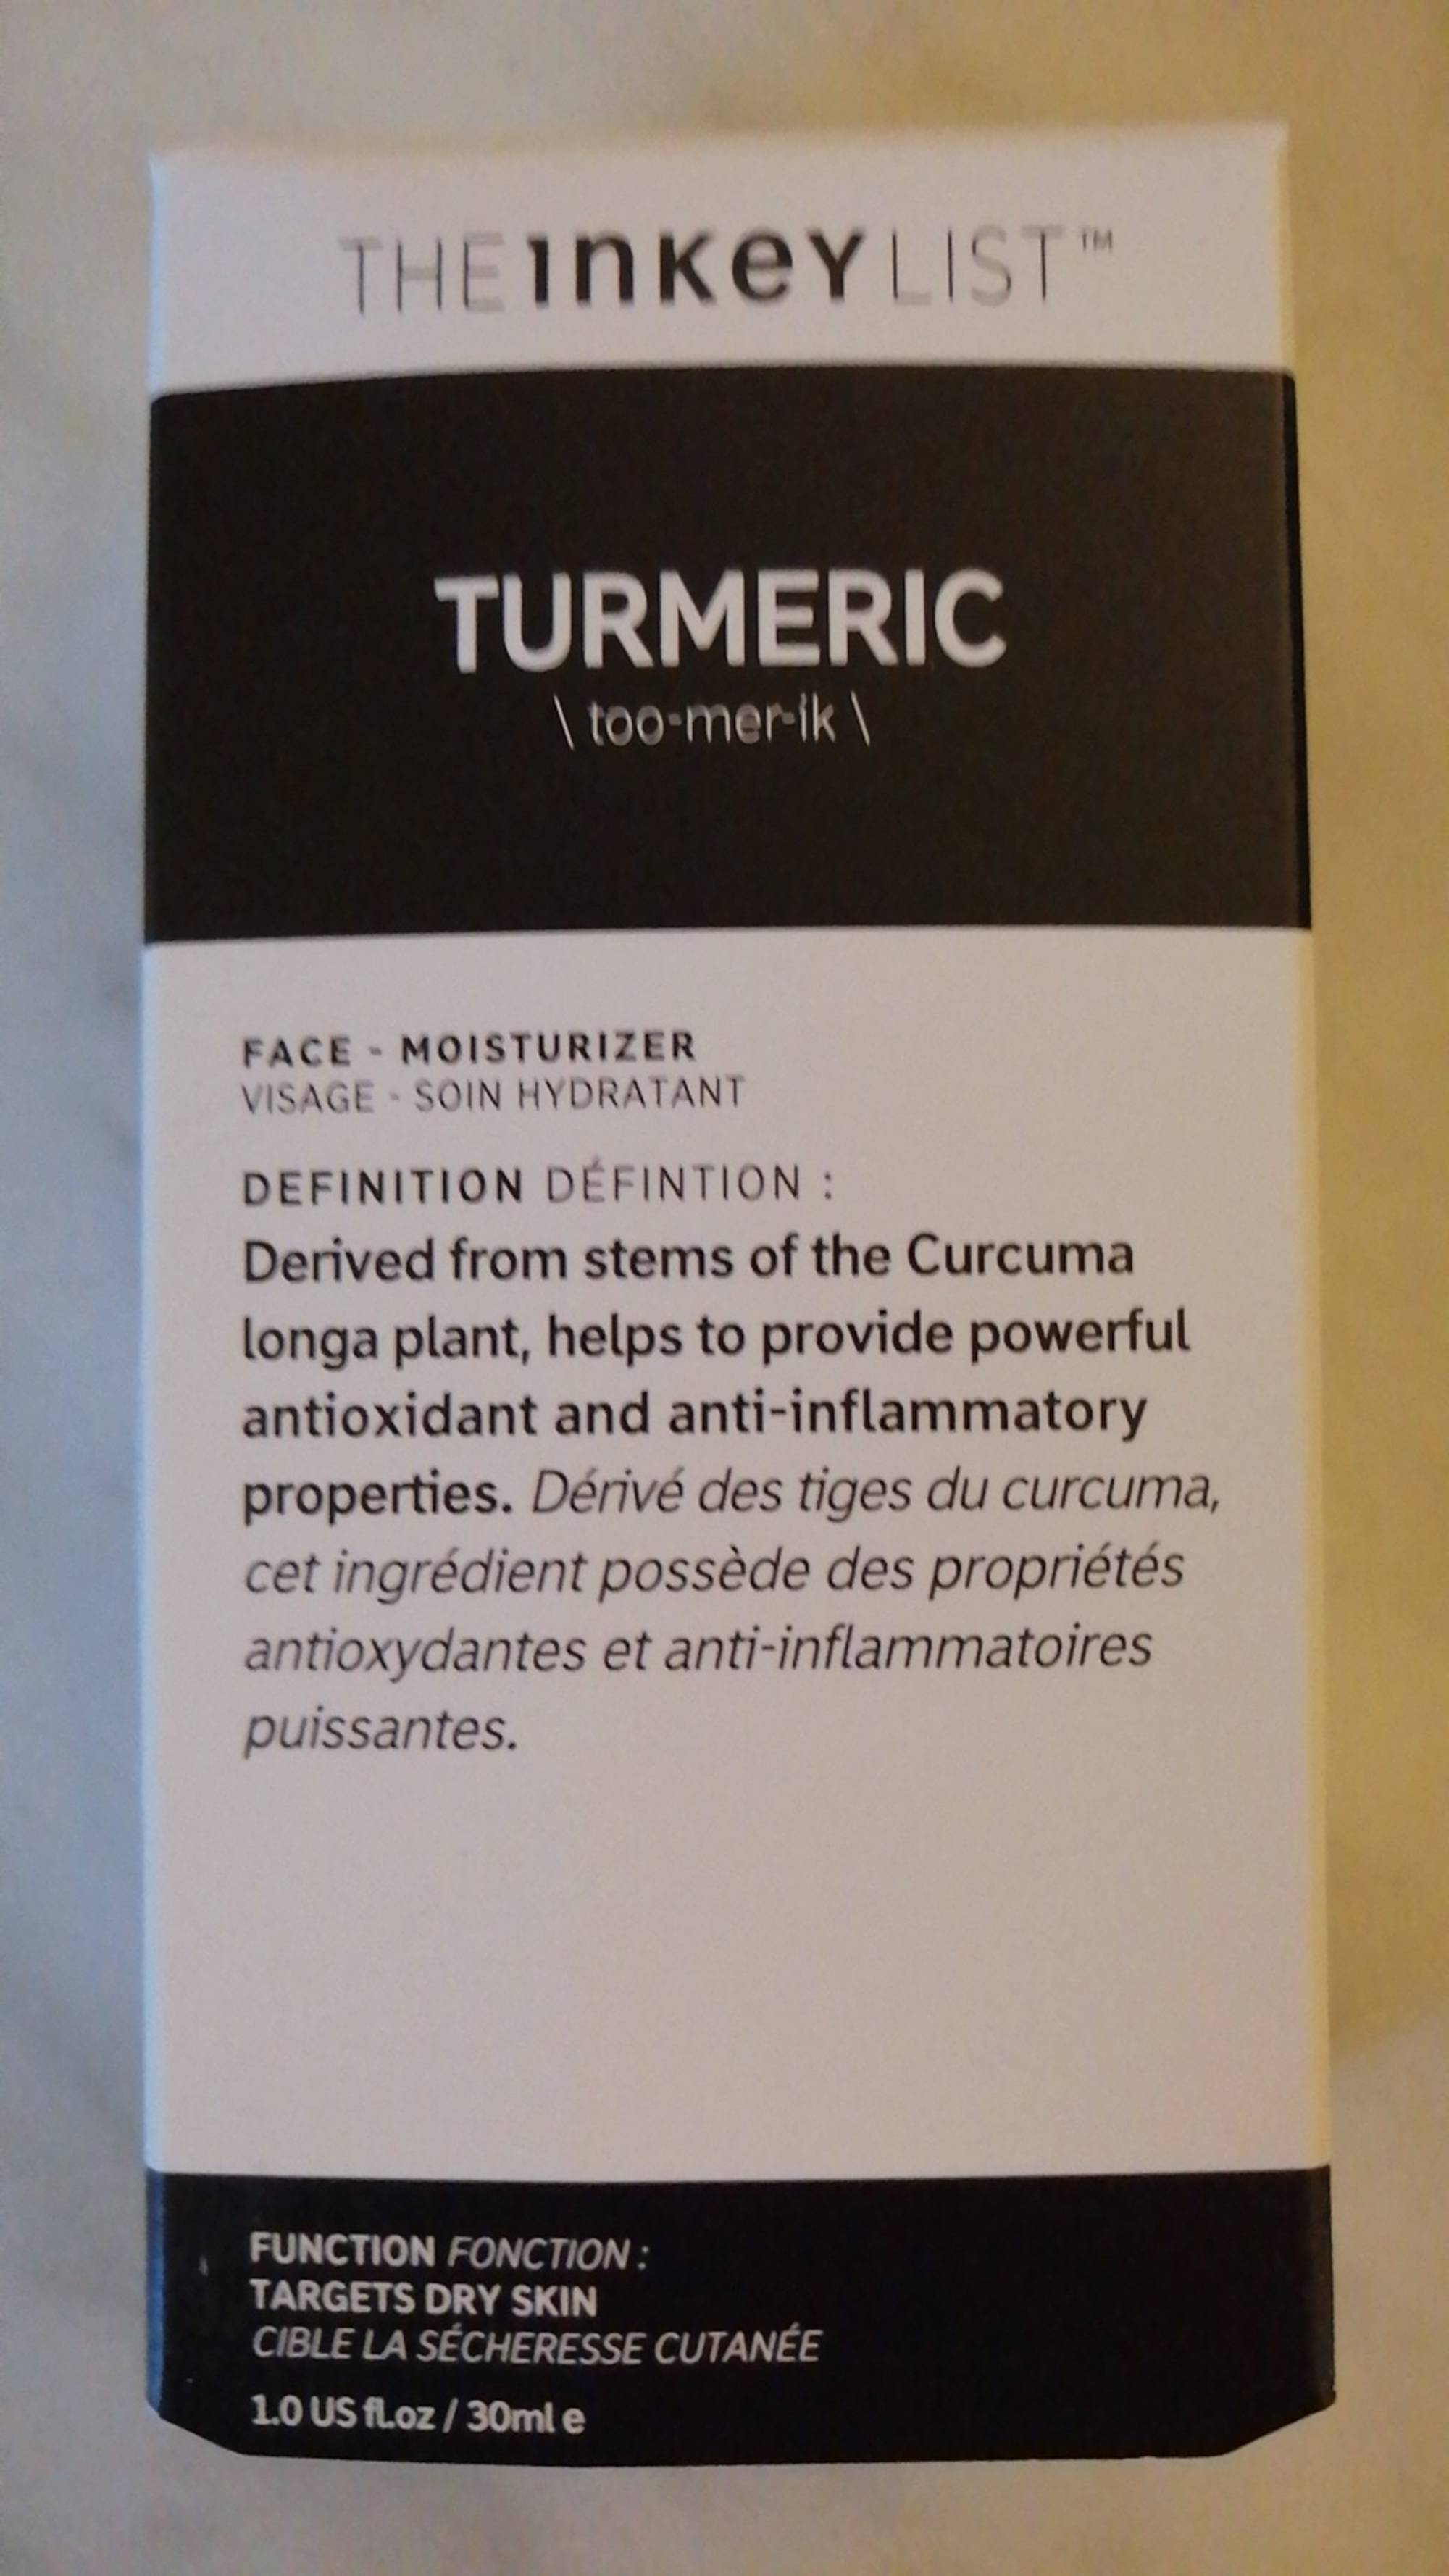 THE INKEY LIST - Turmeric - Soin hydratant visage